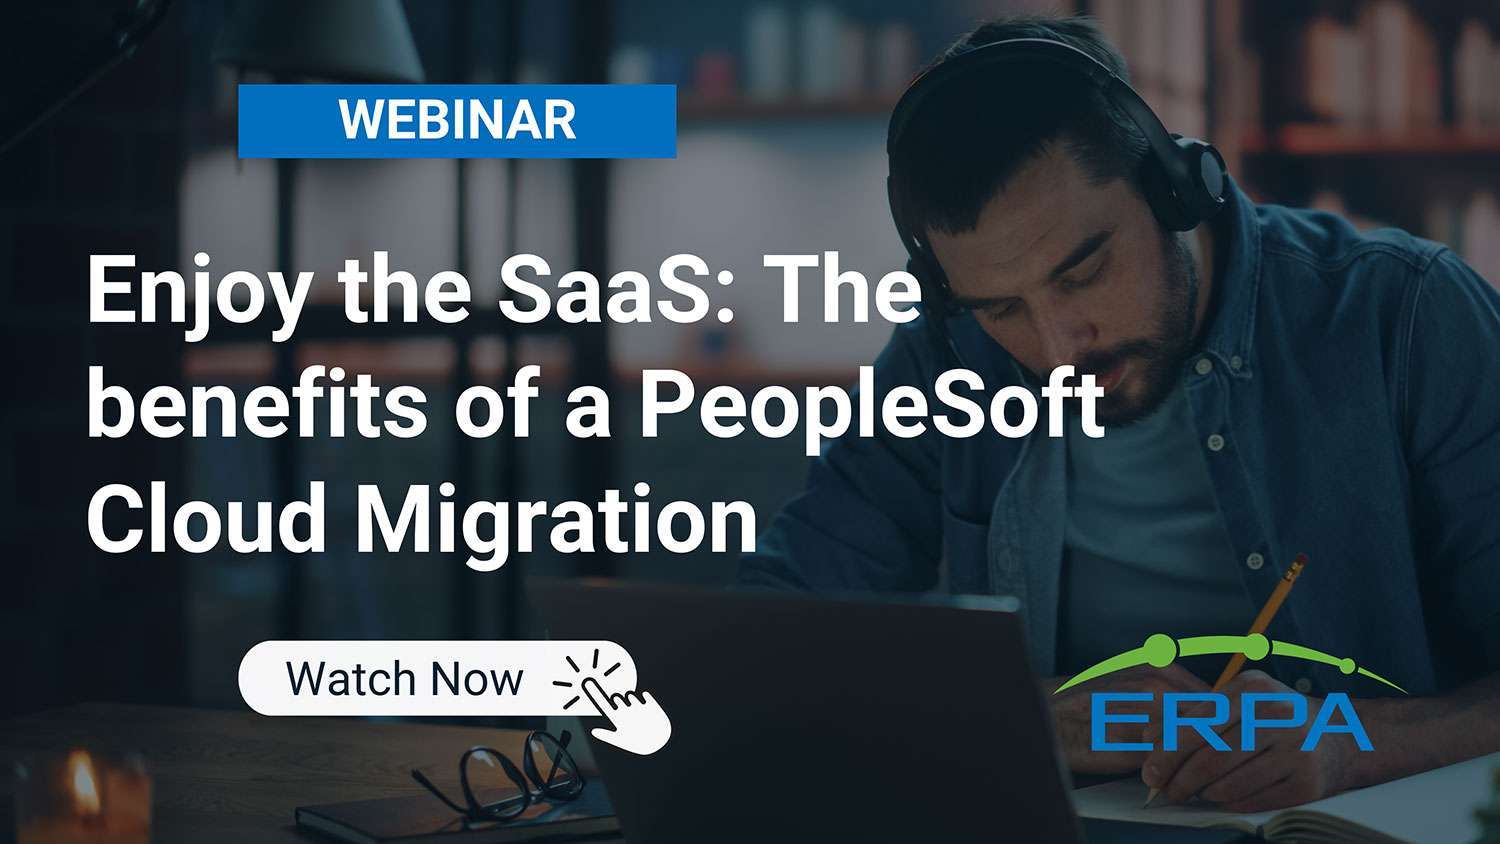 ERPA Webinar: Enjoy the SaaS - The benefits of a PeopleSoft Cloud Migration